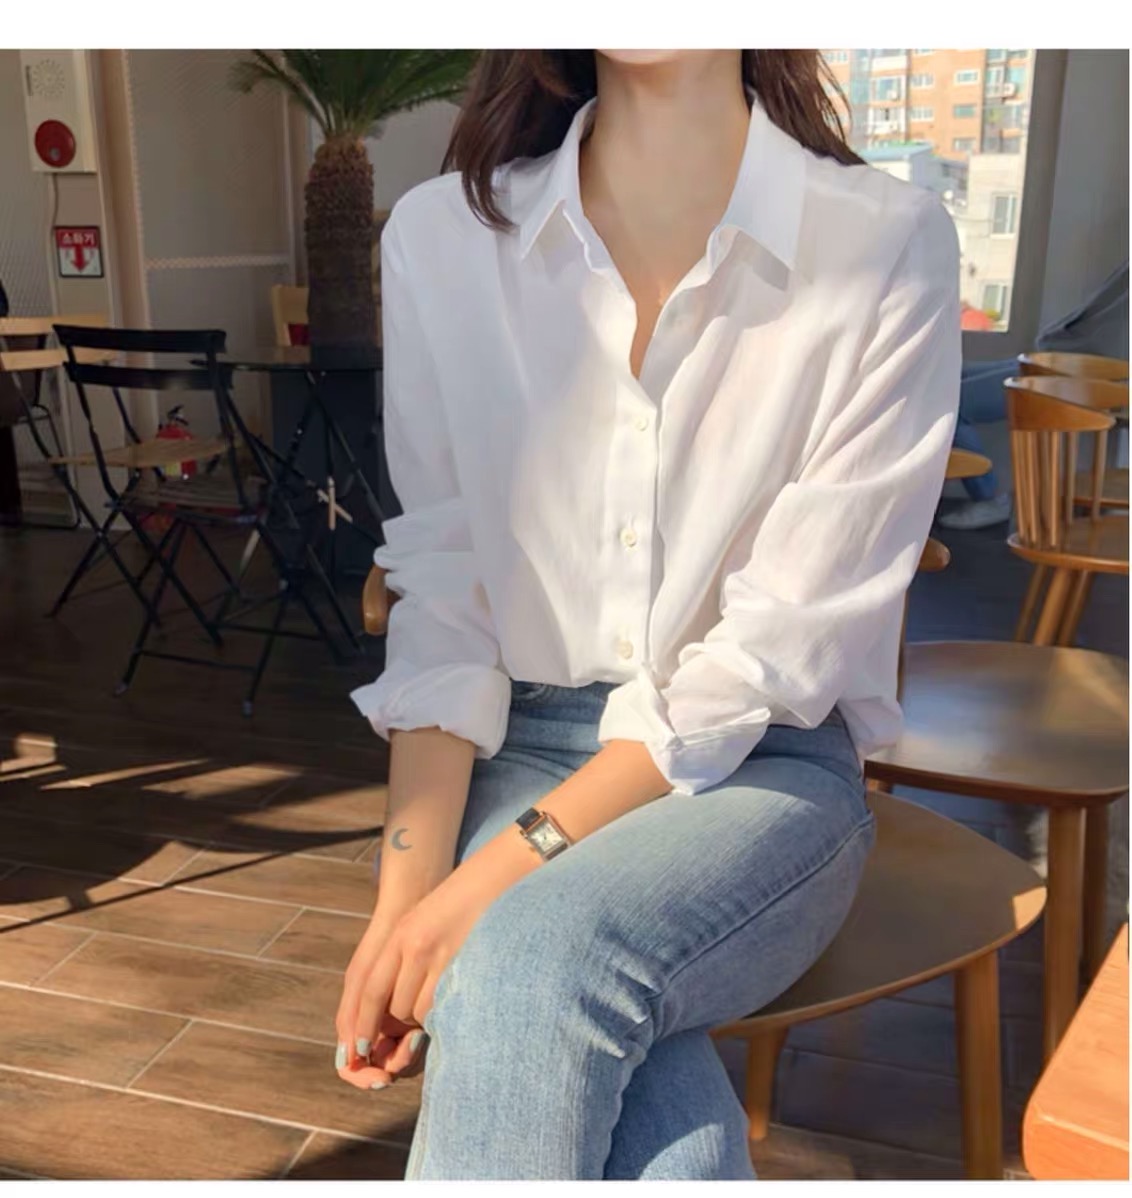 2019 South Korean new autumn white shirt women's casual loose V-neck top basic versatile long sleeve bottom coat